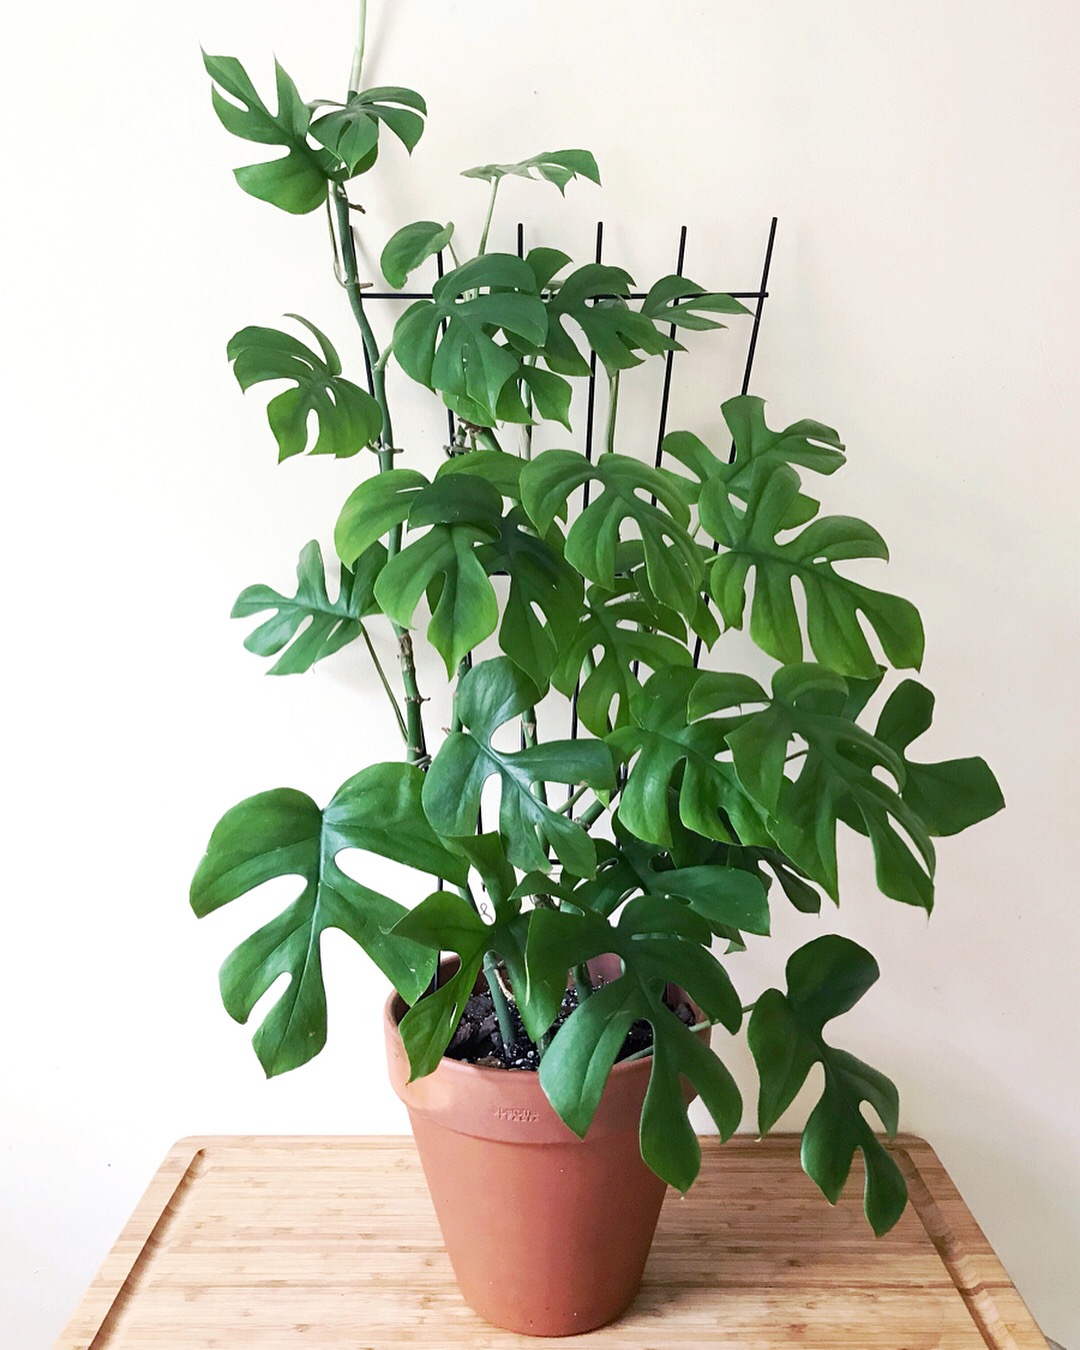 tetrasperma rhaphidophora plant philodendron minima profile stem lifestyle plants